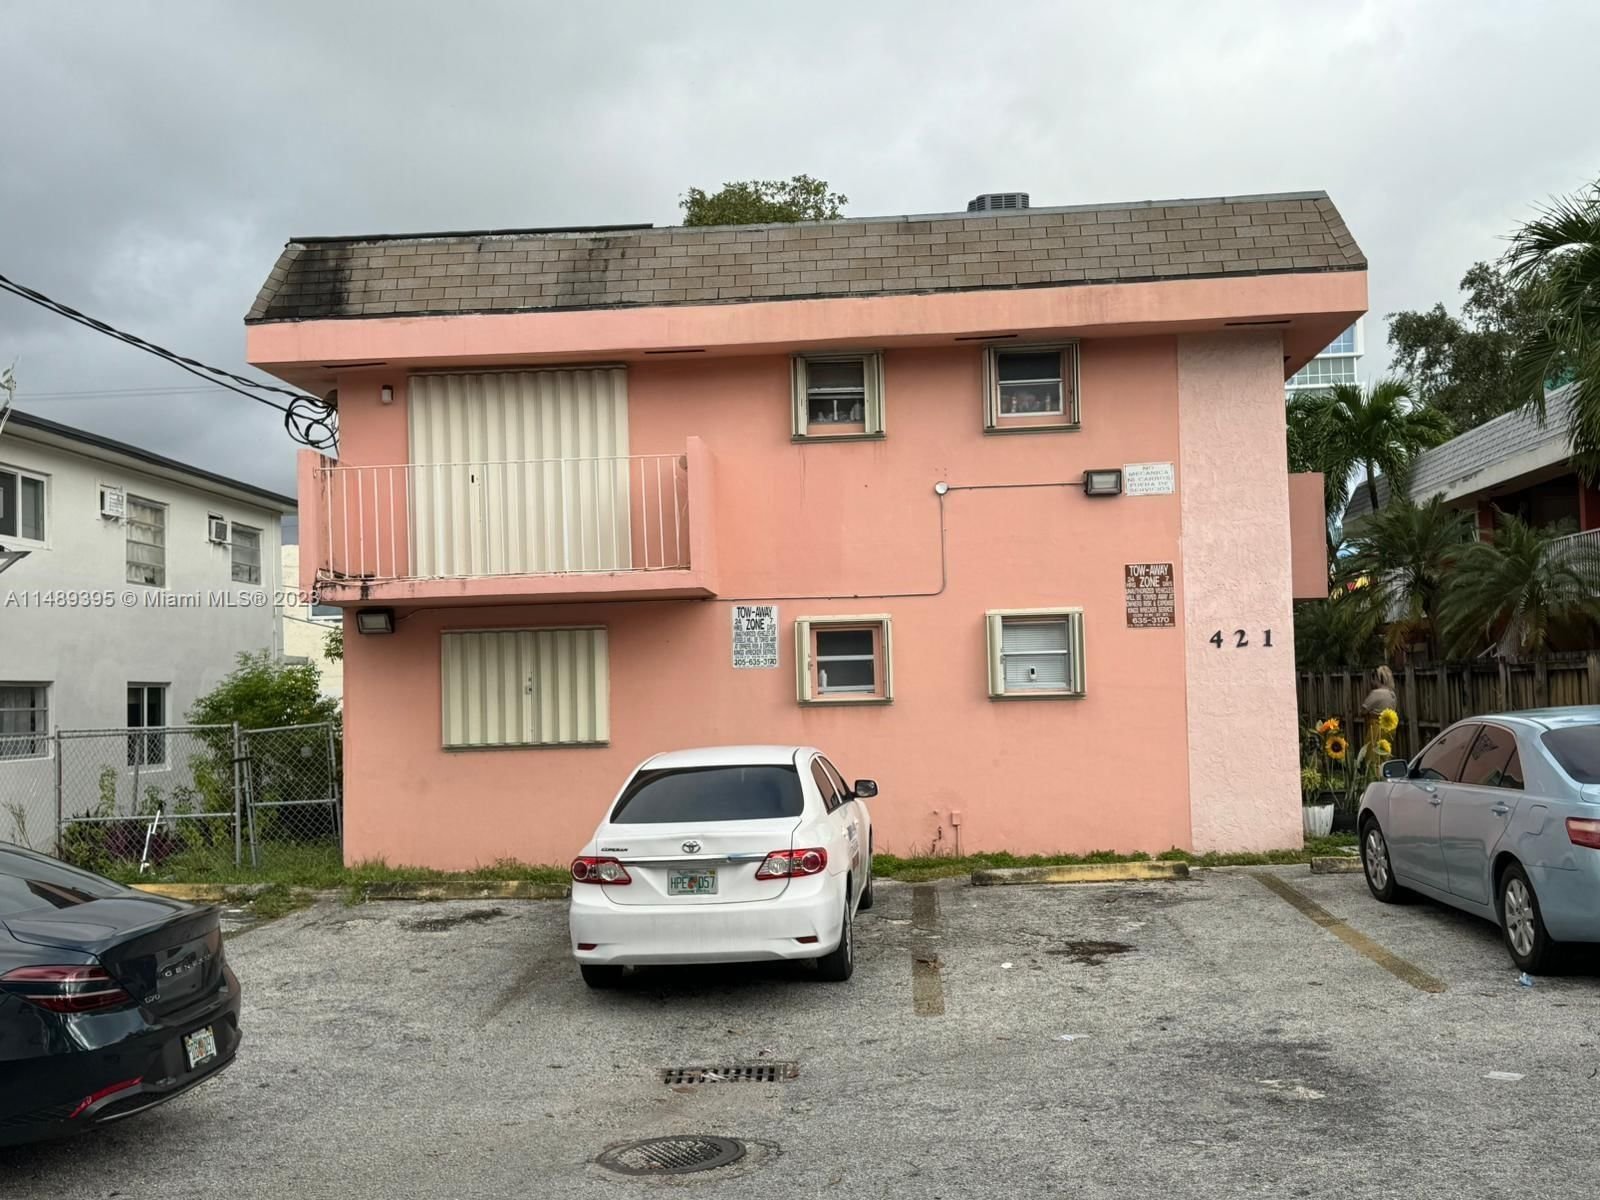 Real estate property located at 421 9th St, Miami-Dade County, Miami, FL